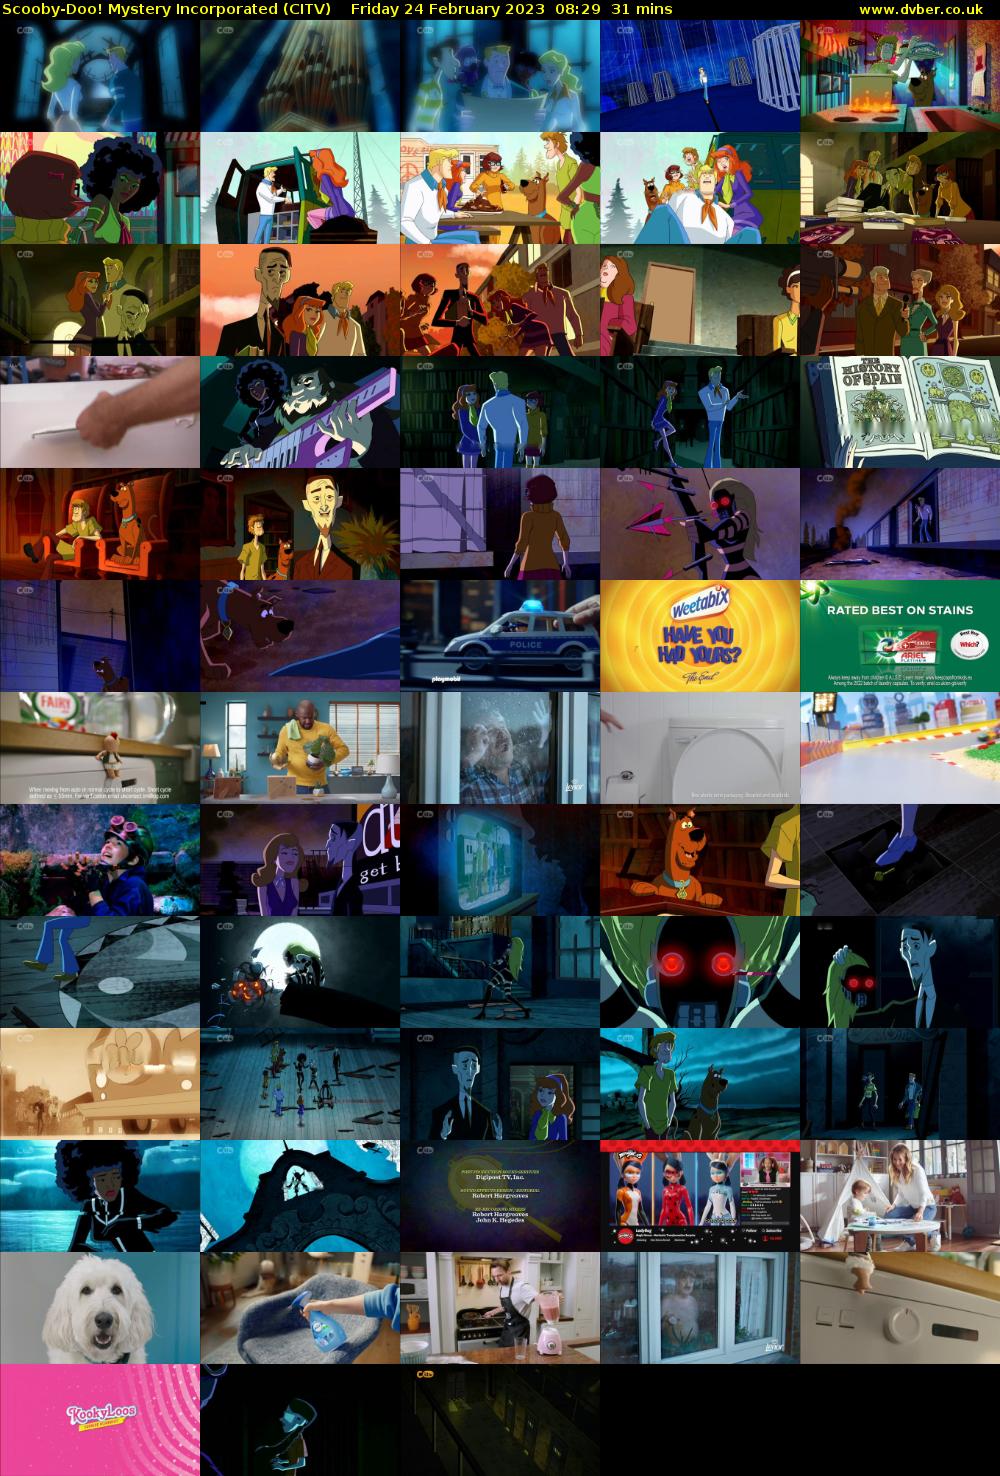 Scooby-Doo! Mystery Incorporated (CITV) Friday 24 February 2023 08:29 - 09:00